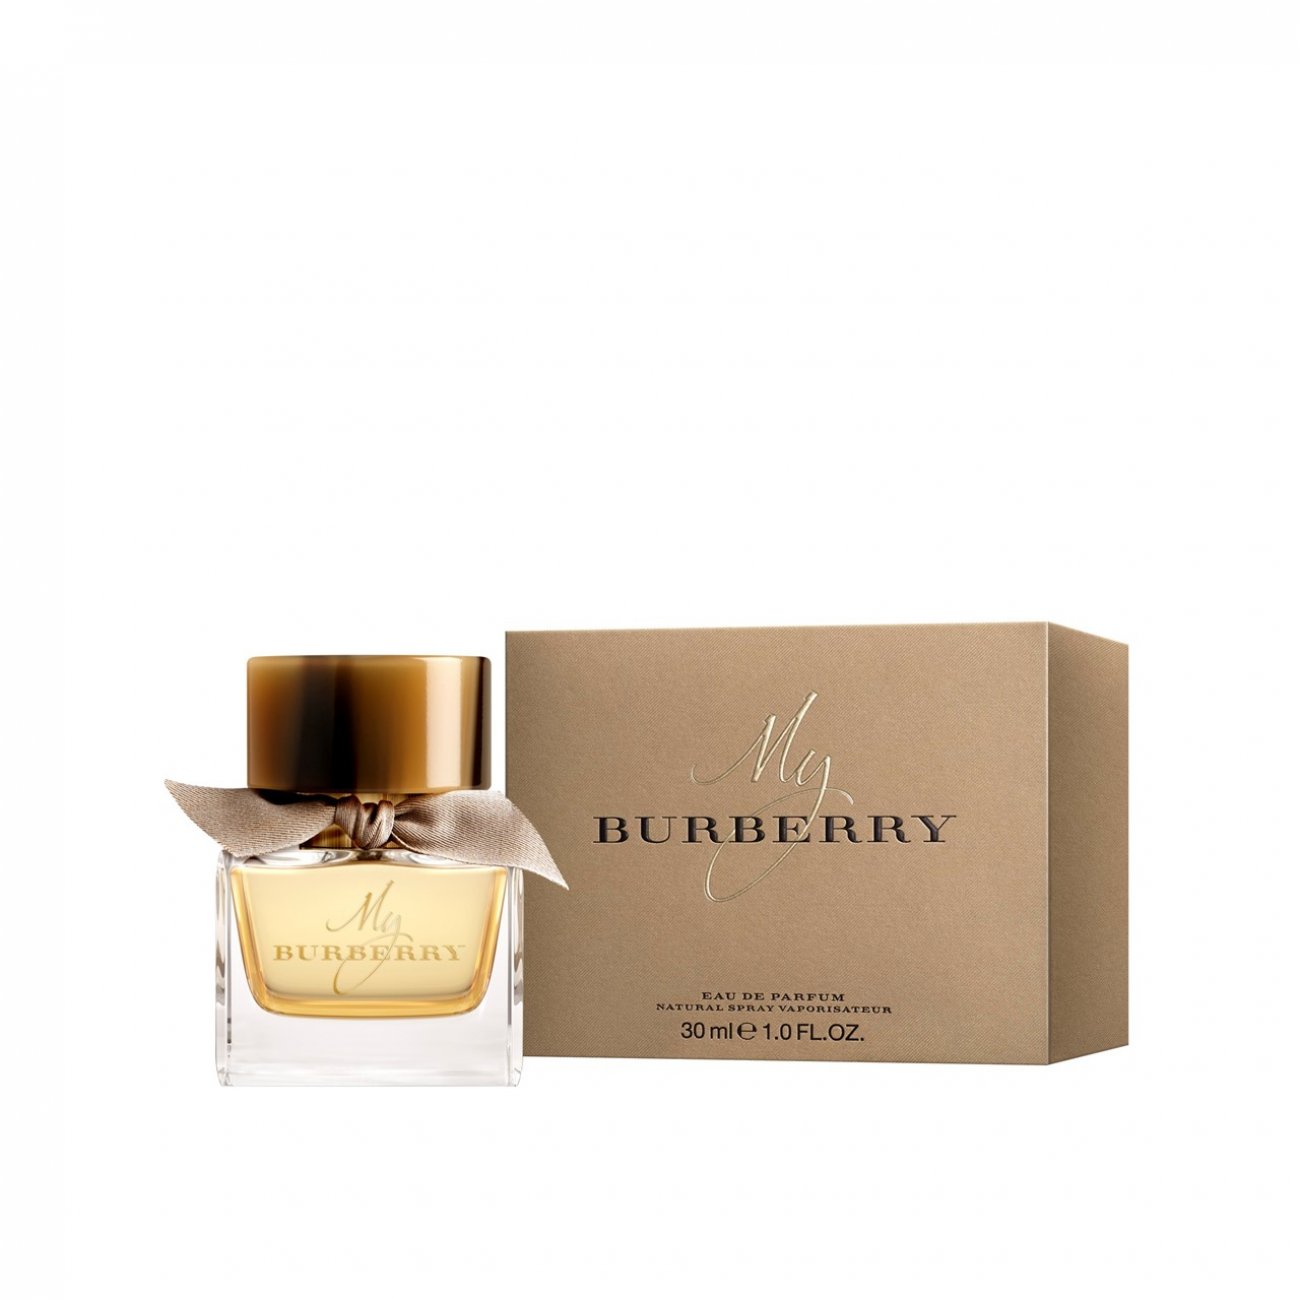 Buy Burberry My Burberry Eau de Parfum 30ml · Laos